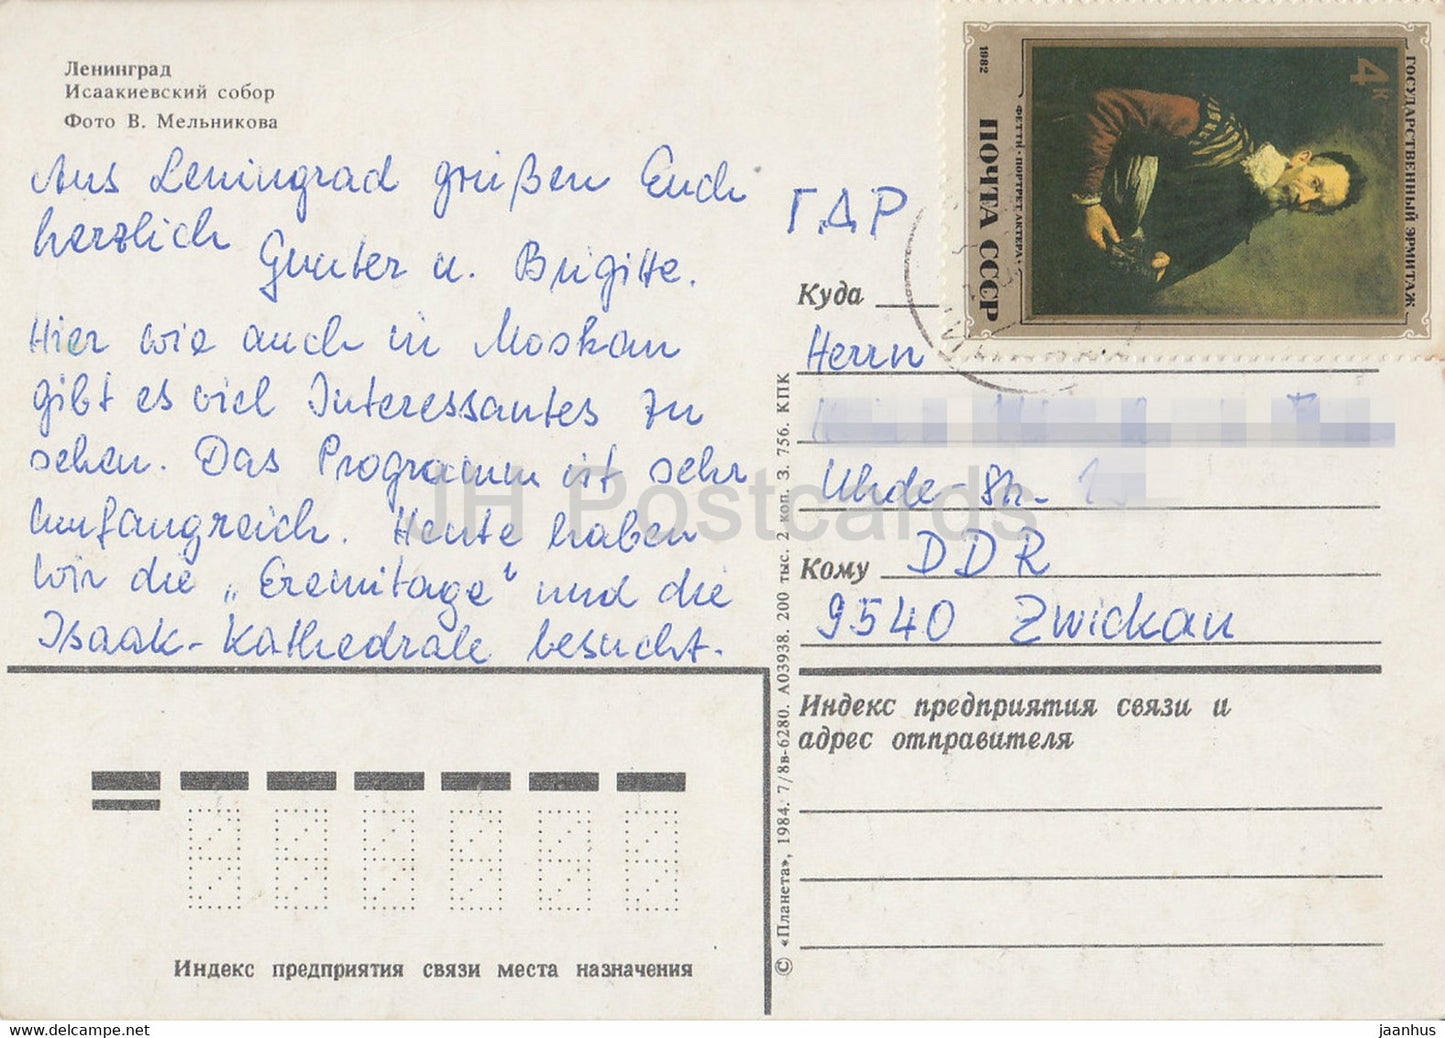 Leningrad - St Petersburg - Saint Isaac's Cathedral - car Volga - postal stationery - 1984 - Russia USSR - used